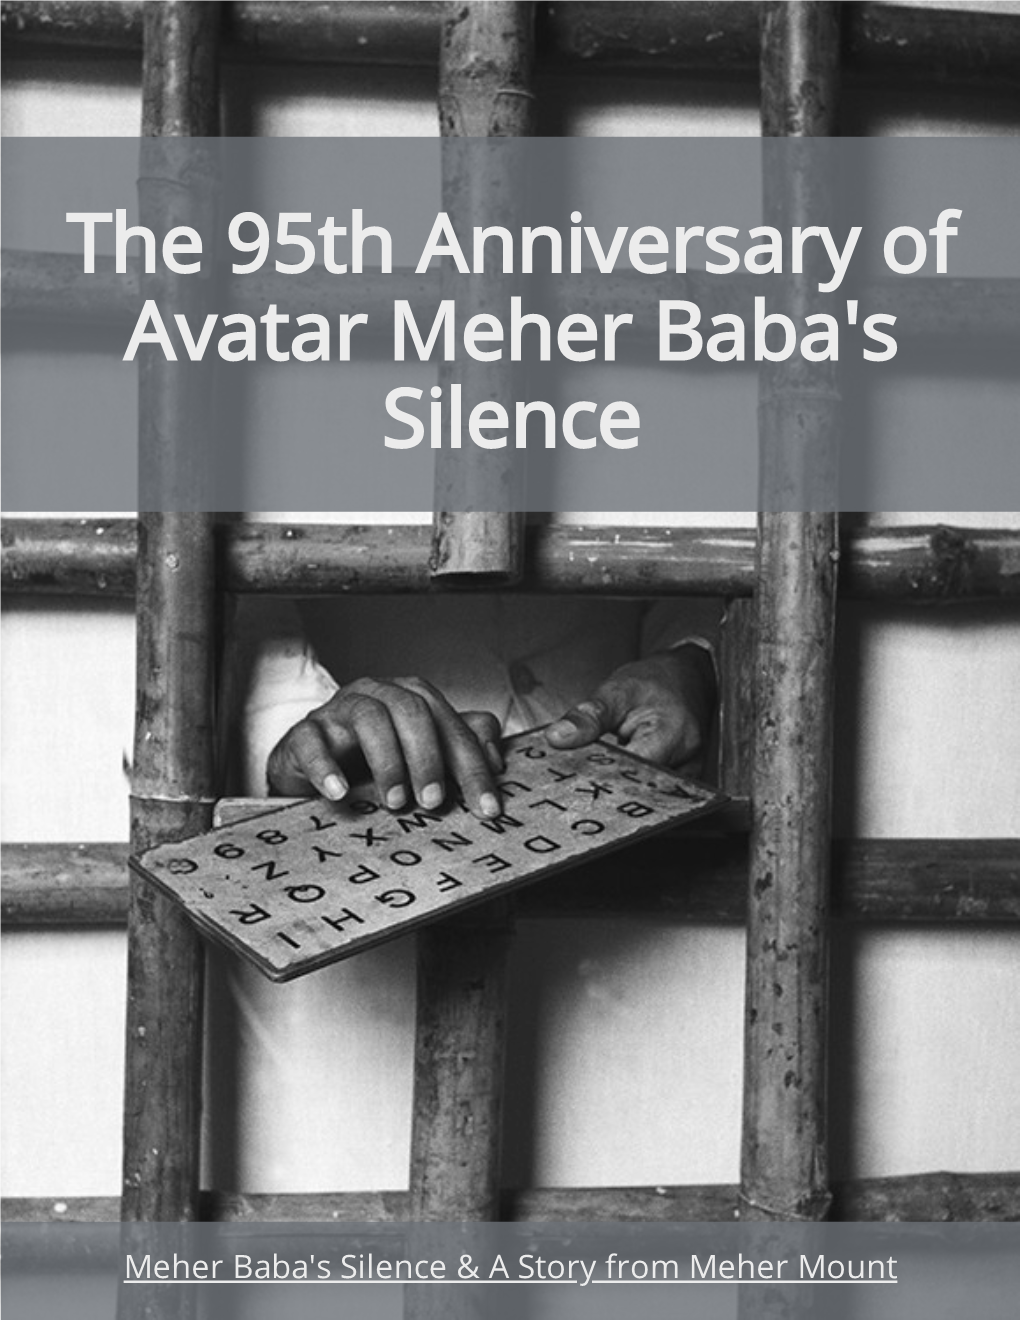 Meher Baba's Silence